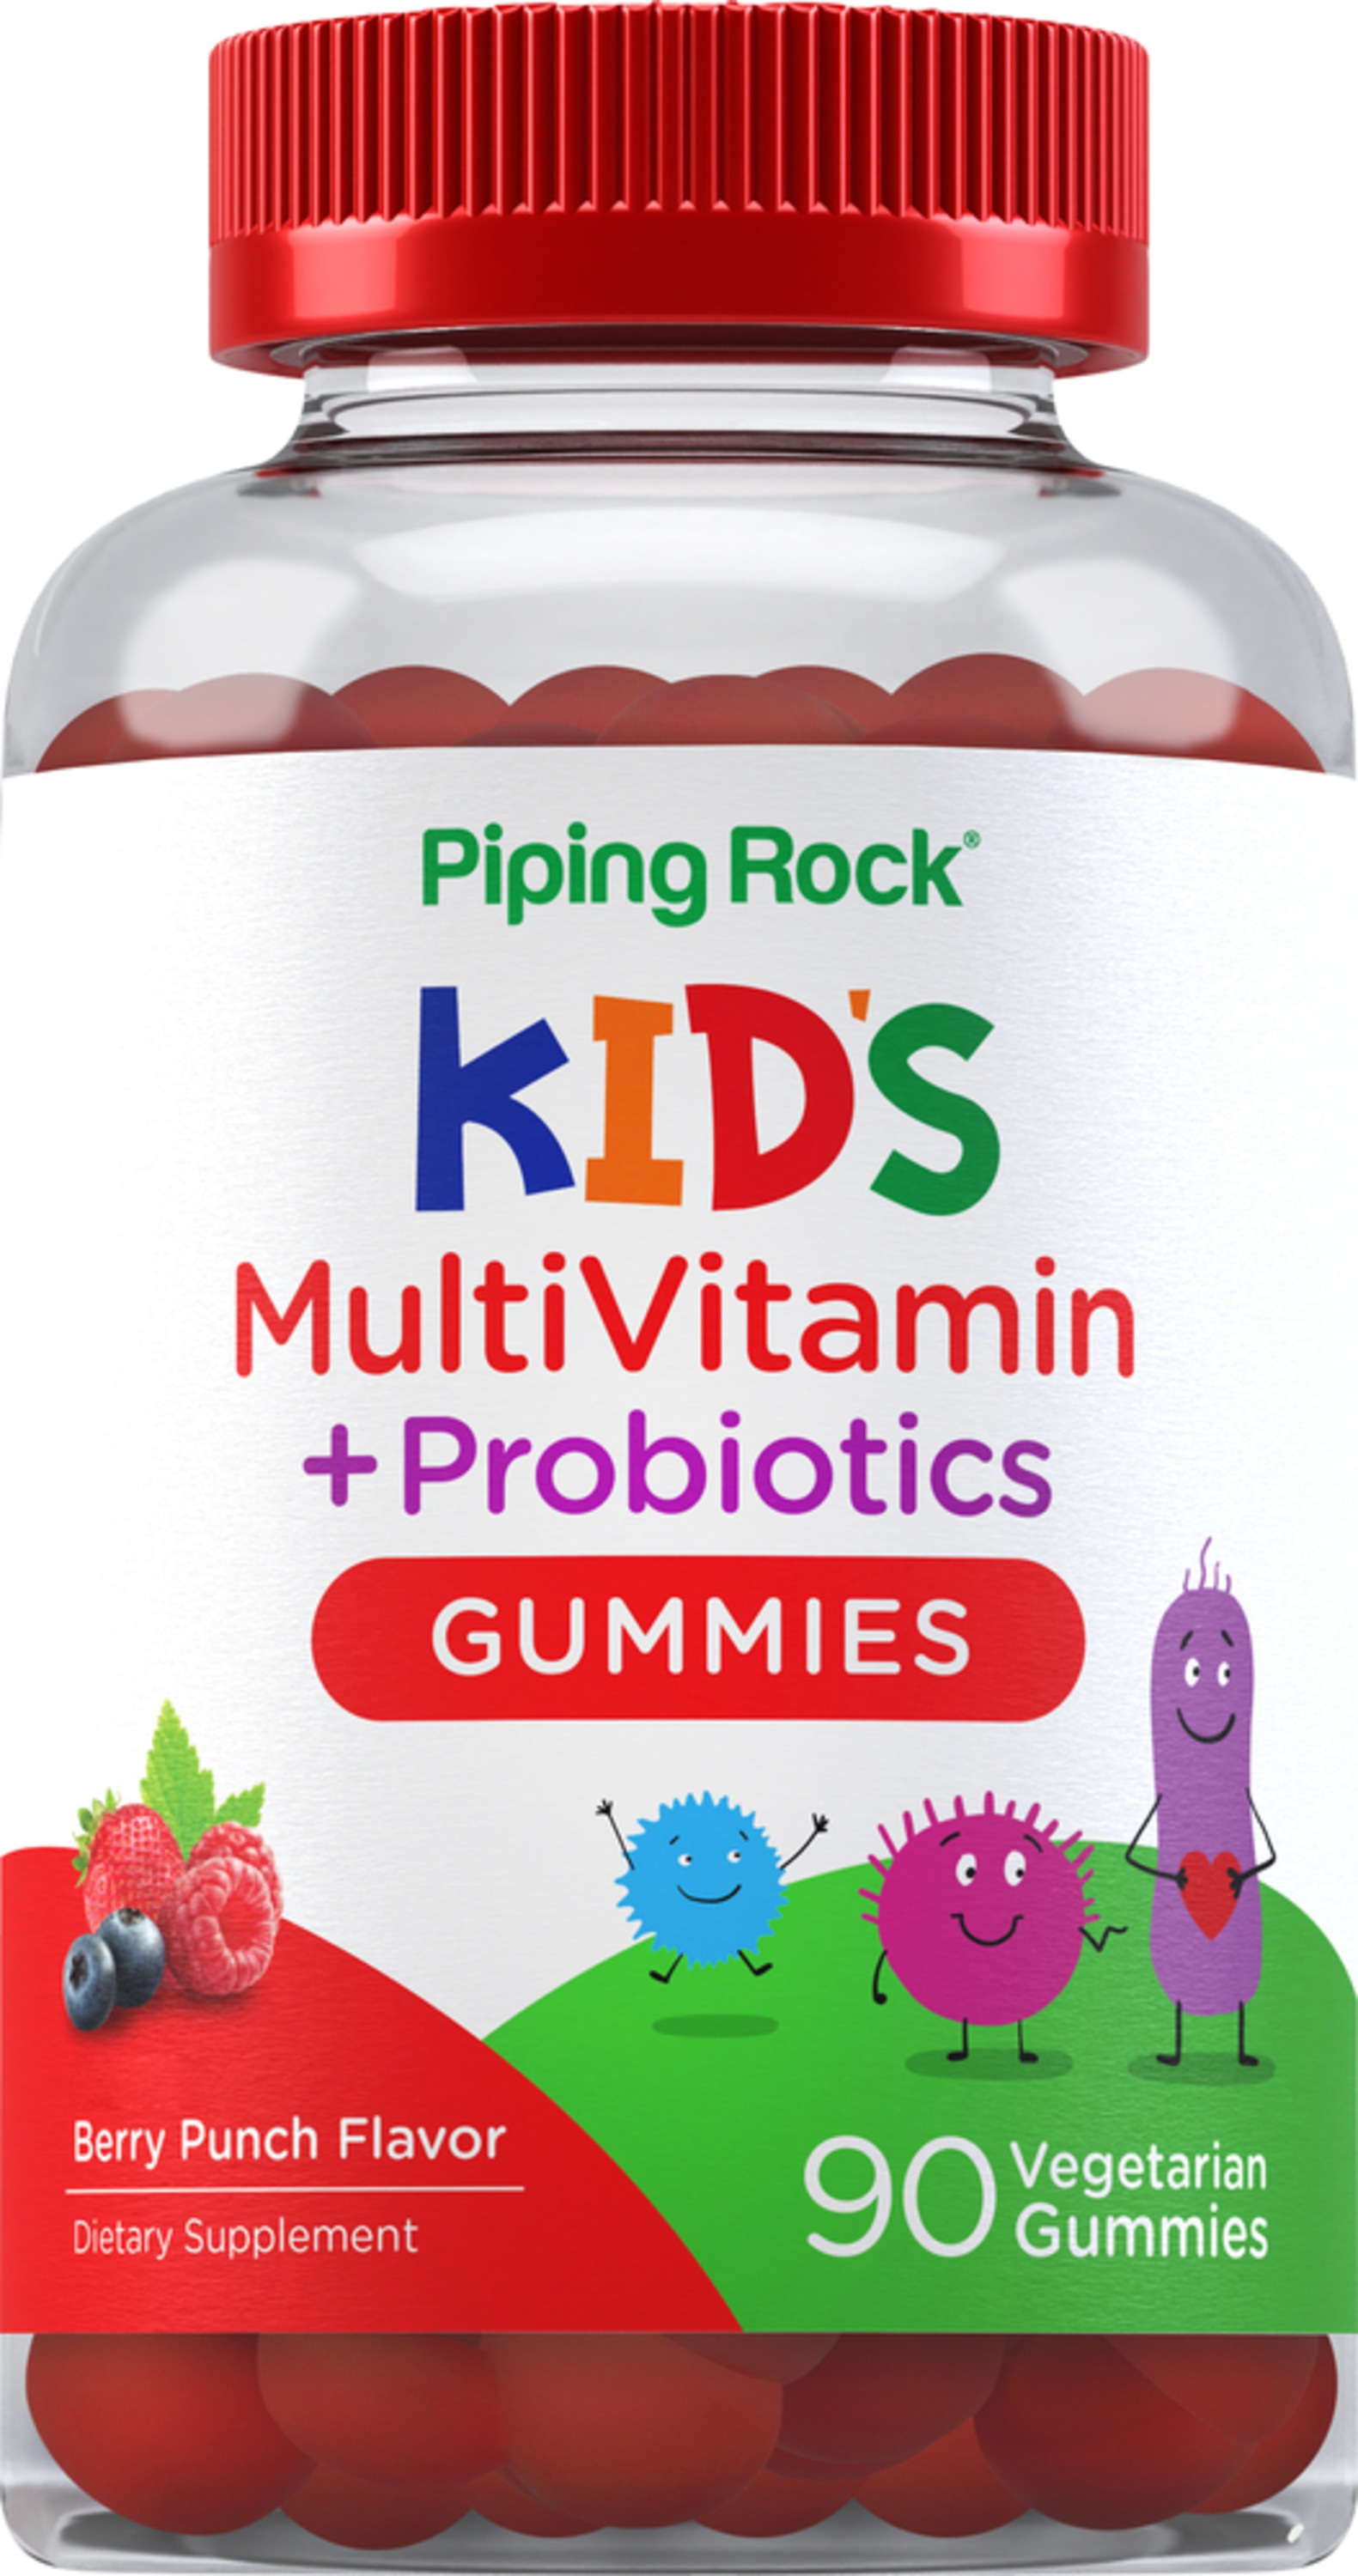 Kids Whole Fruit Multivitamin Gummies, Cherry